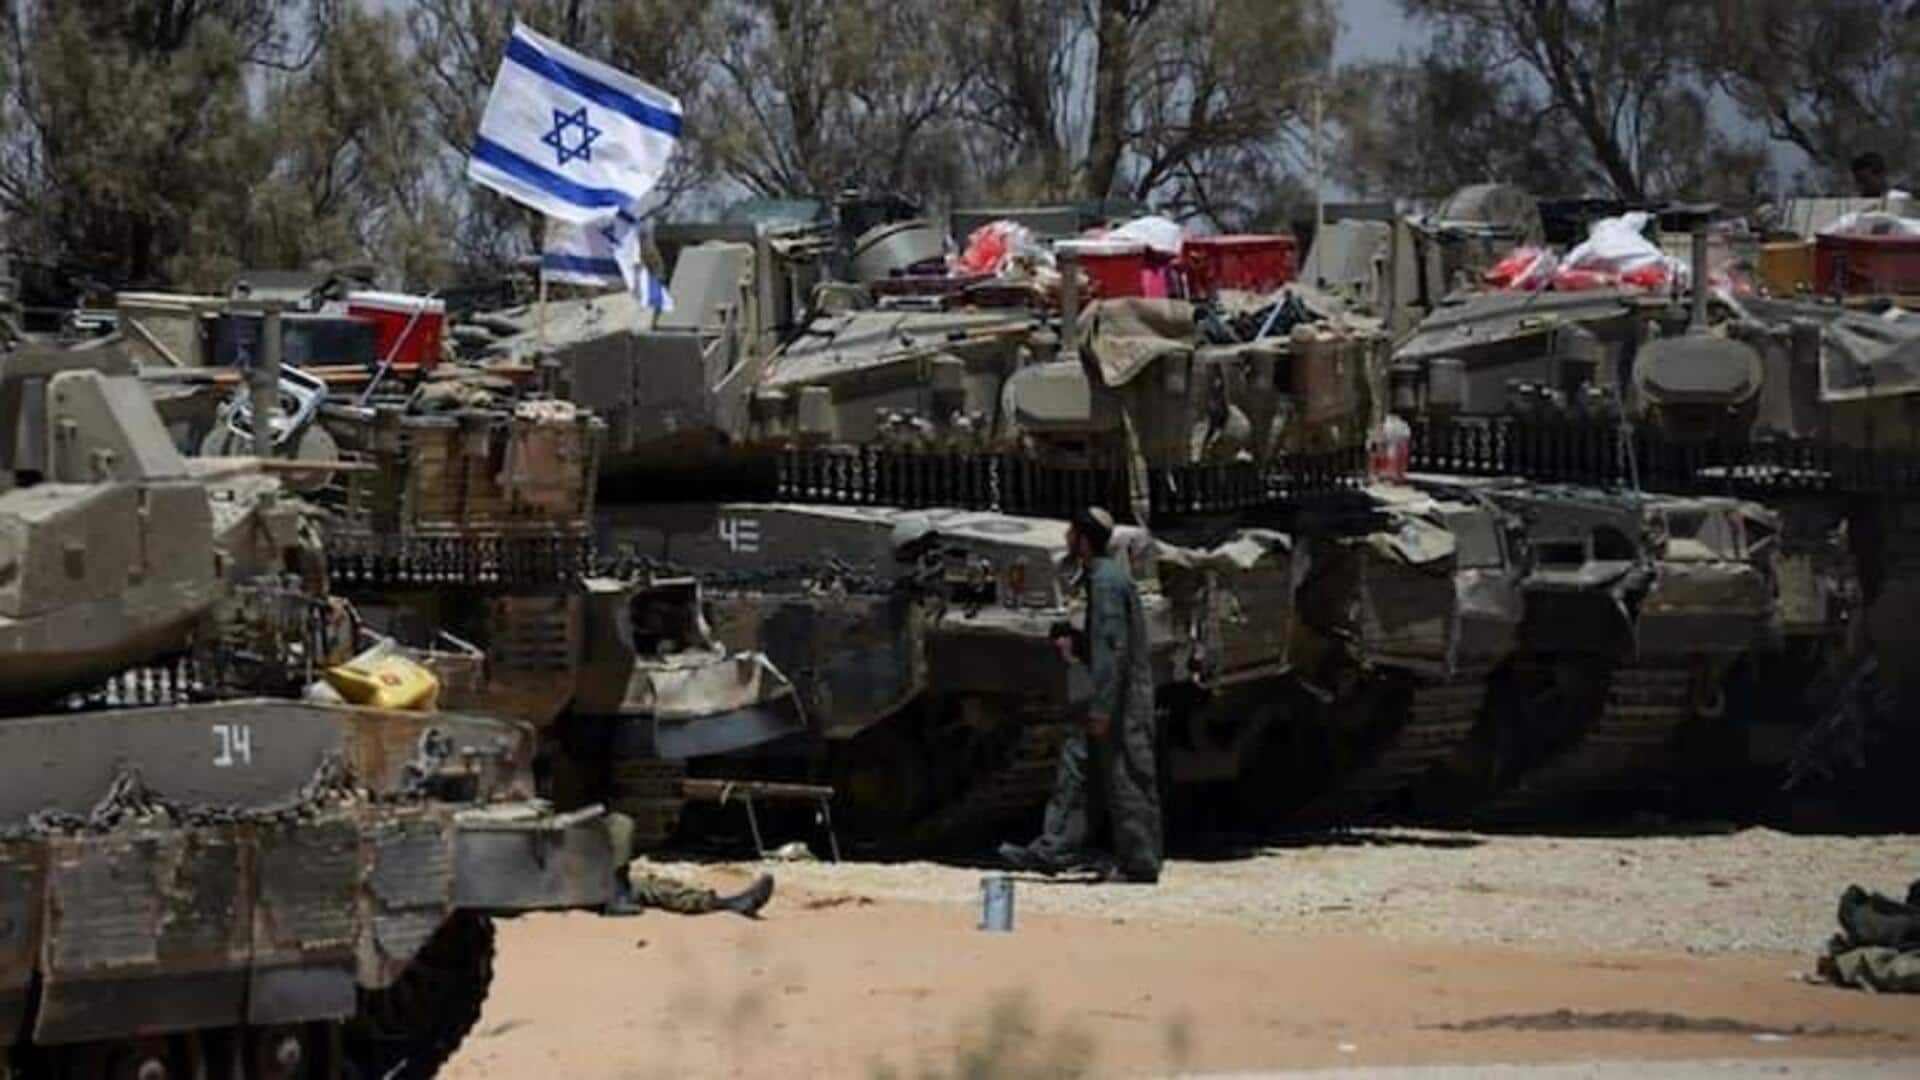 Israeli Supreme Court mandates military draft for ultra-Orthodox men